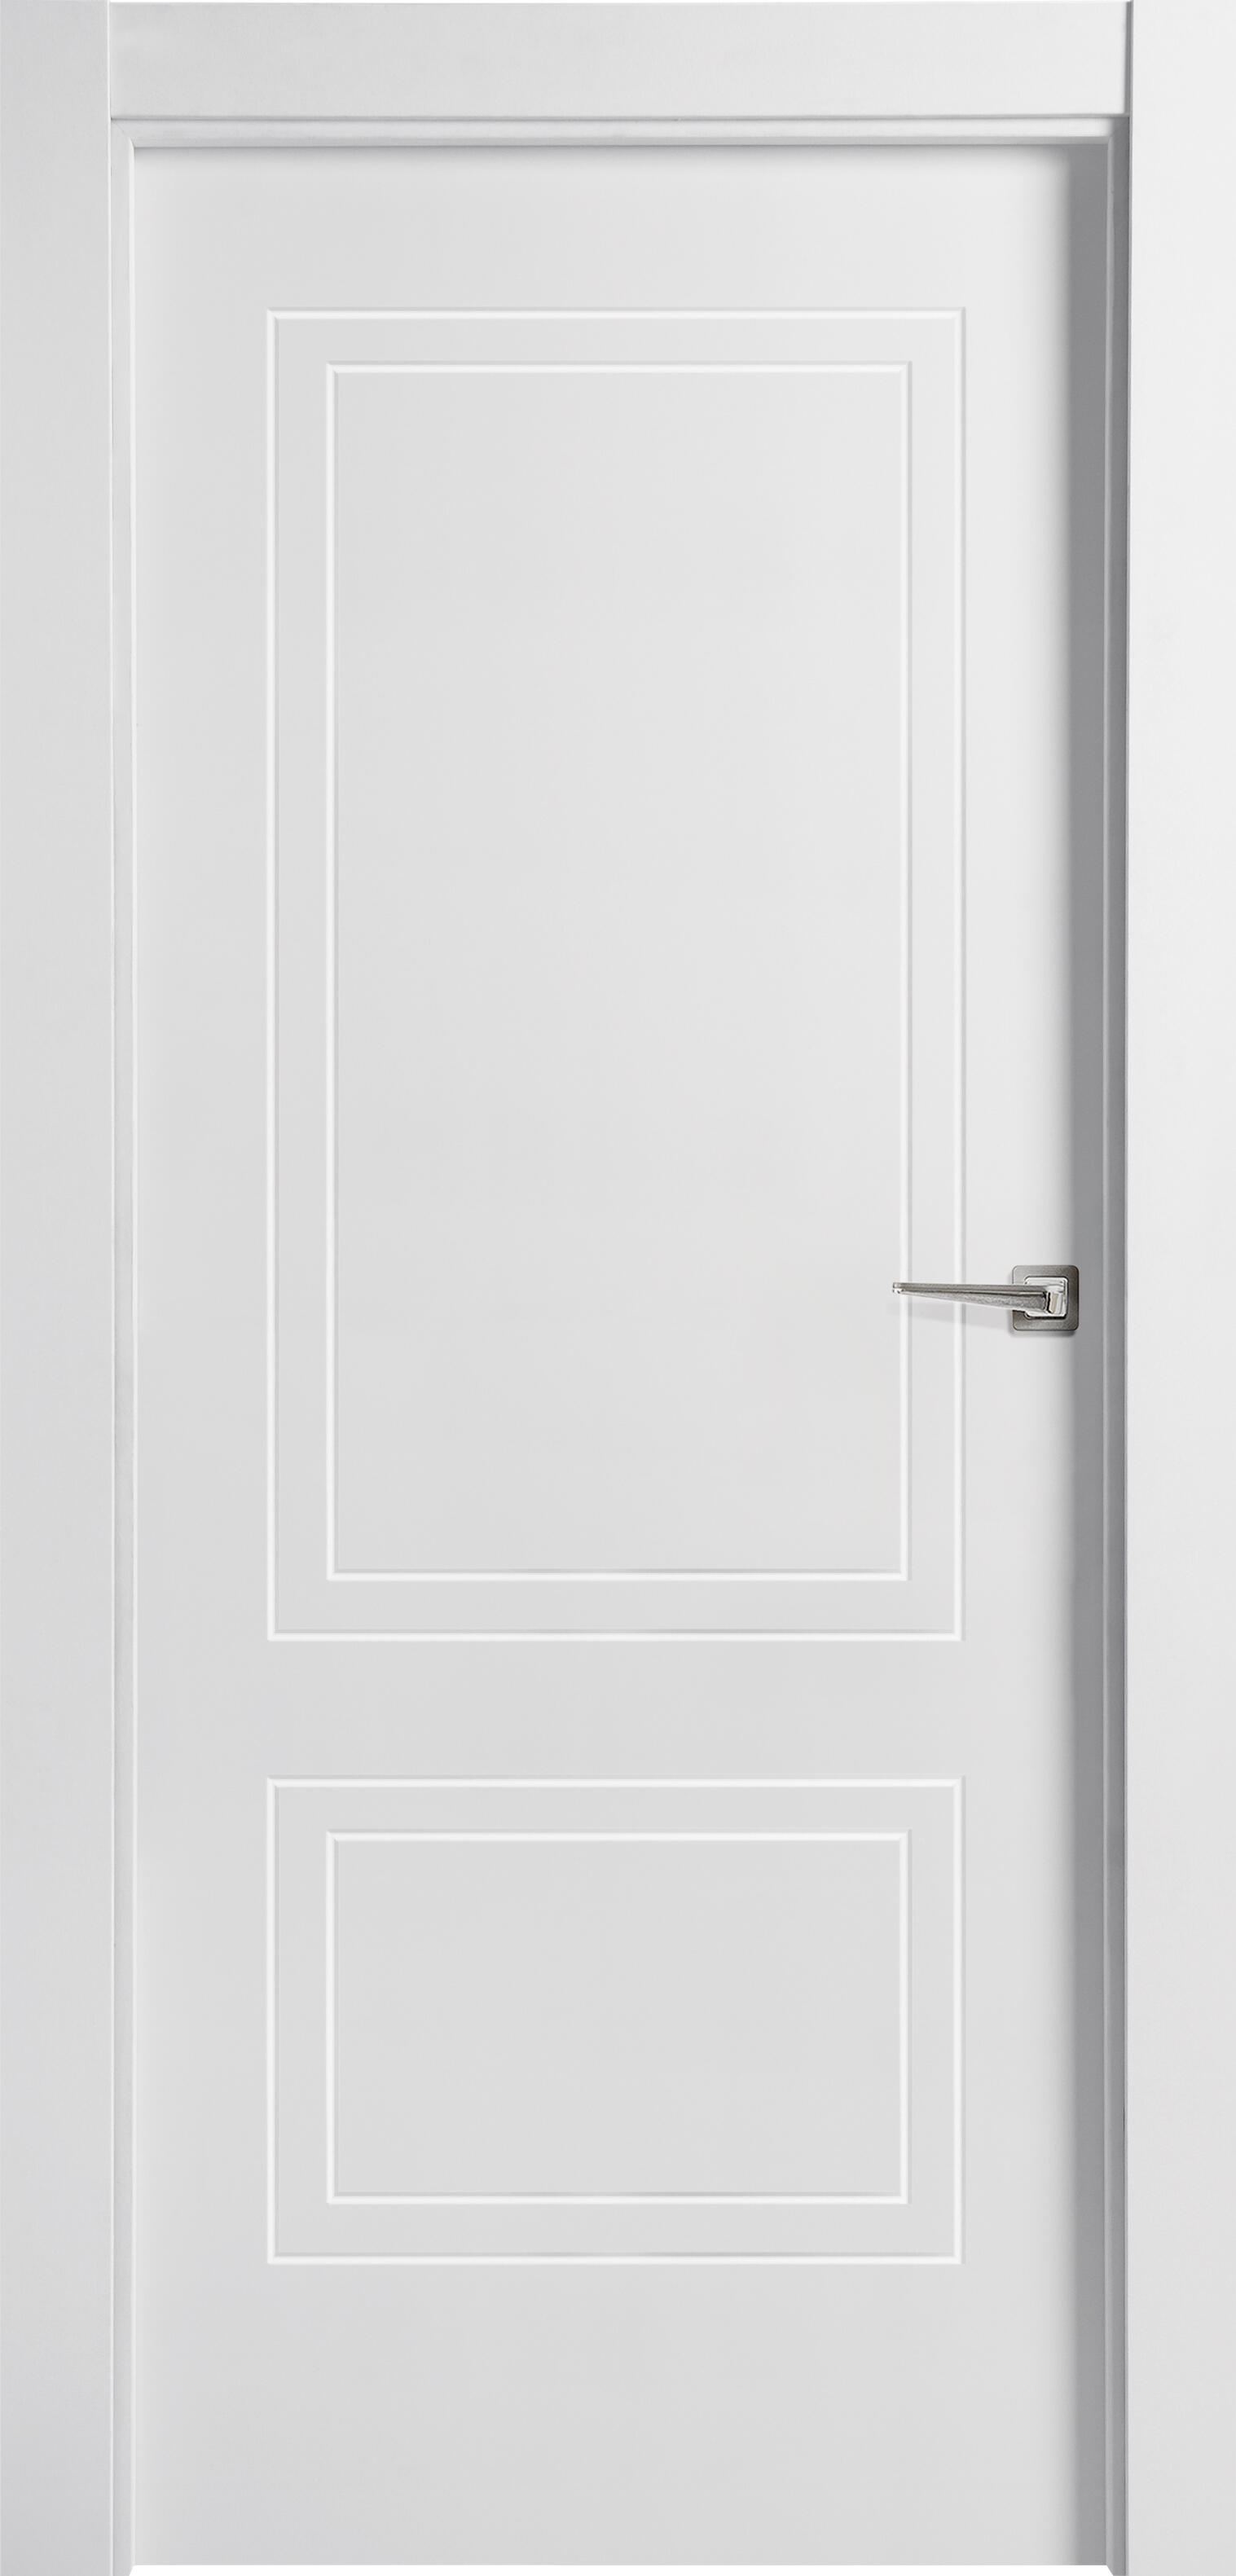 Puerta boston blanco de apertura izquierda de 11x 72.5 cm